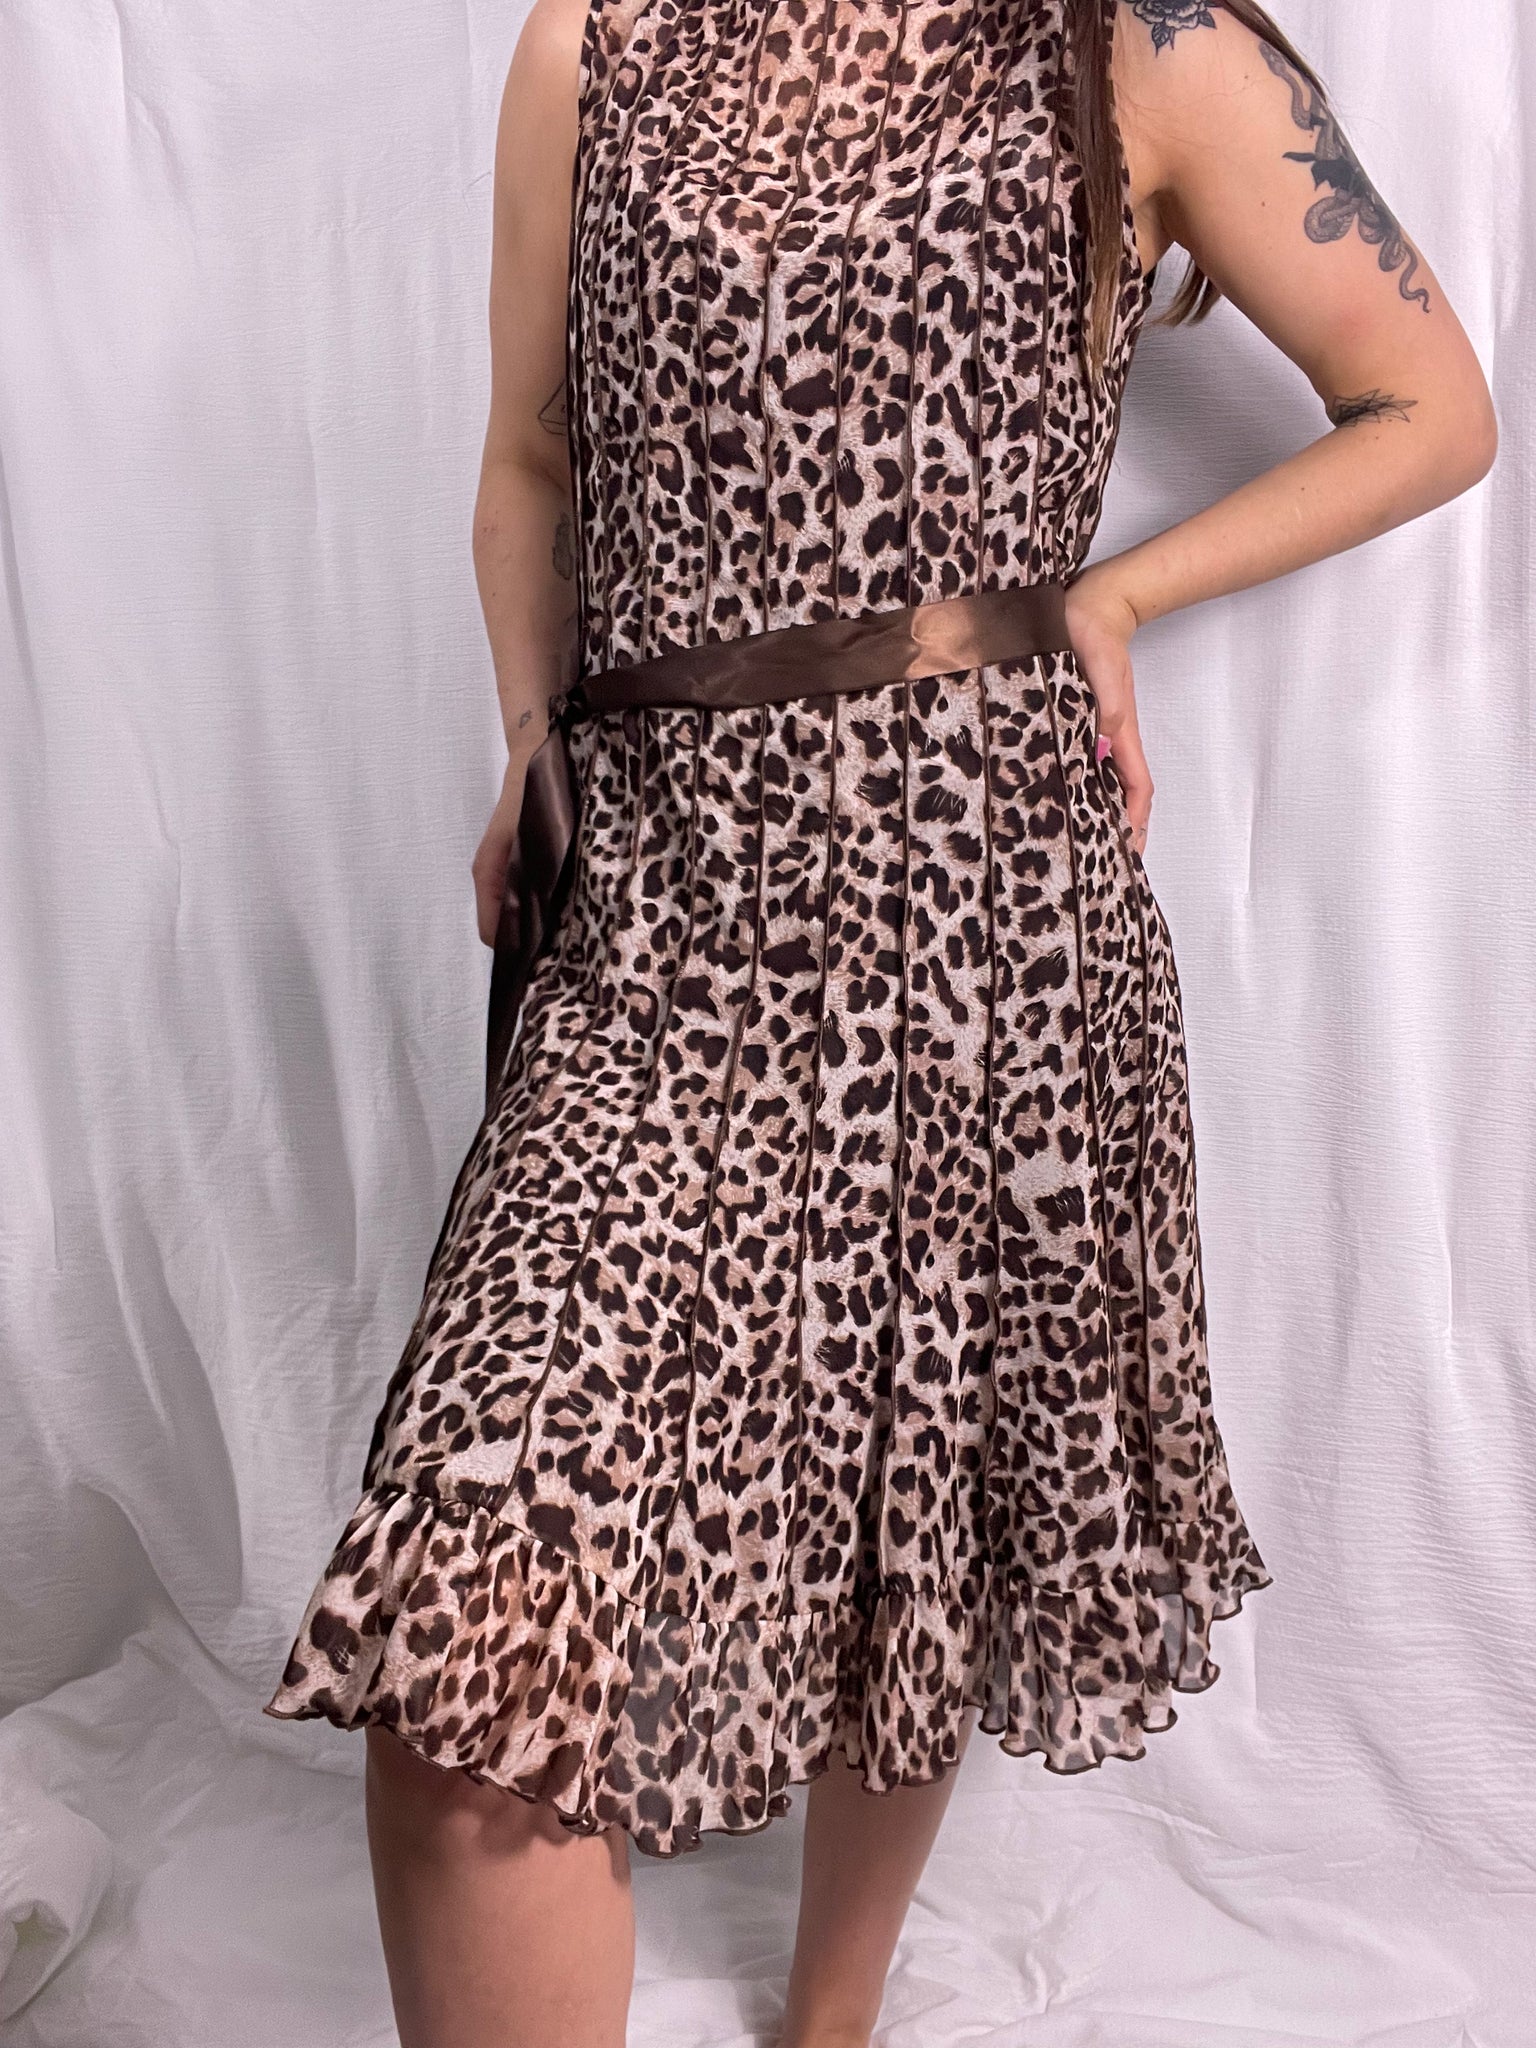 Leopard print belted dress, Size 12